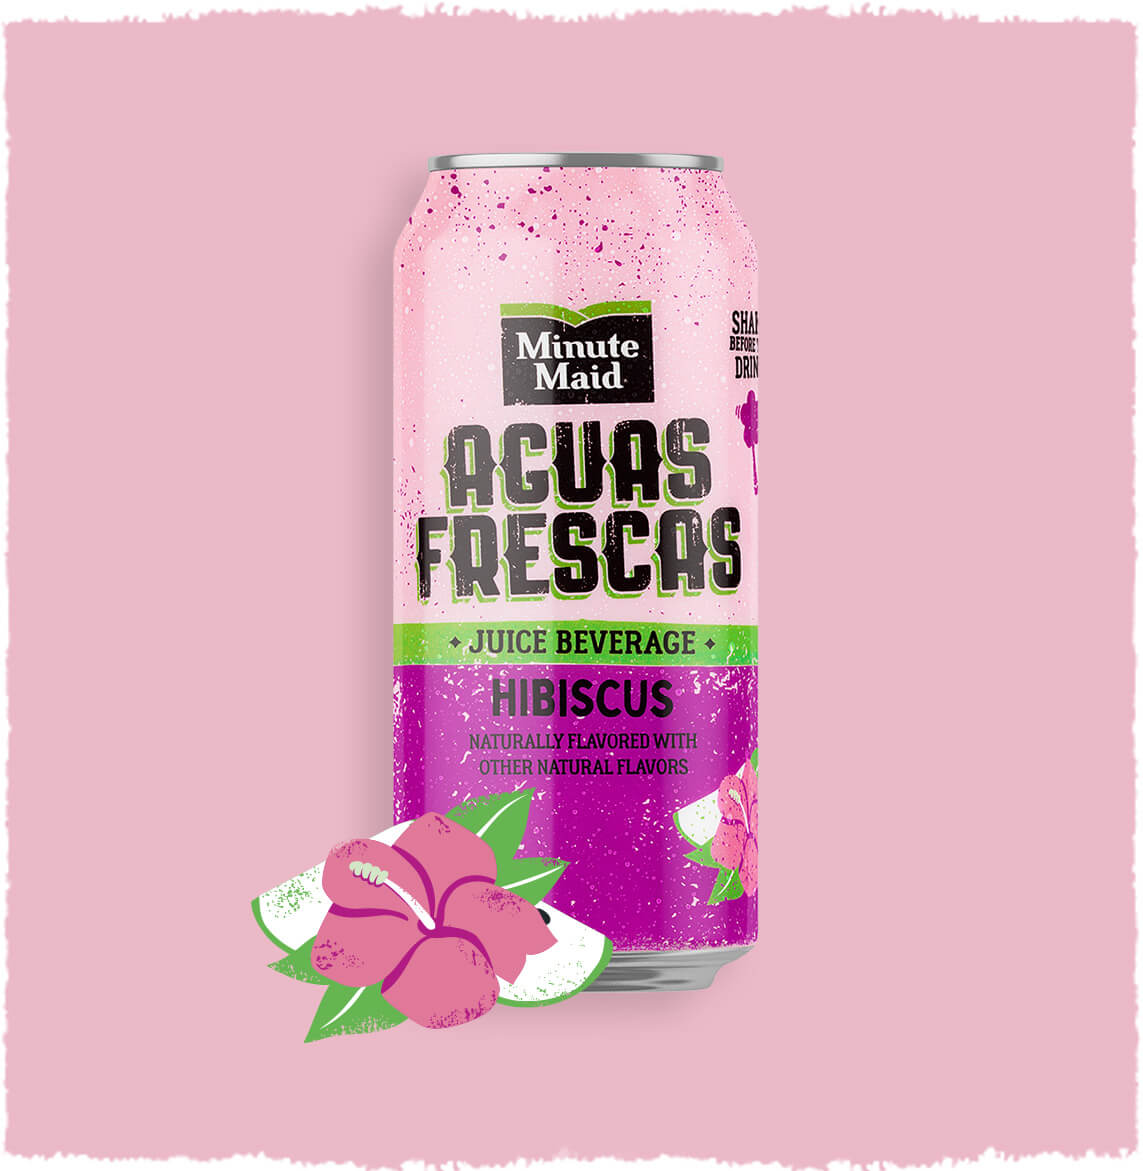 Minute Maid Aguas Frescas Hibiscus can